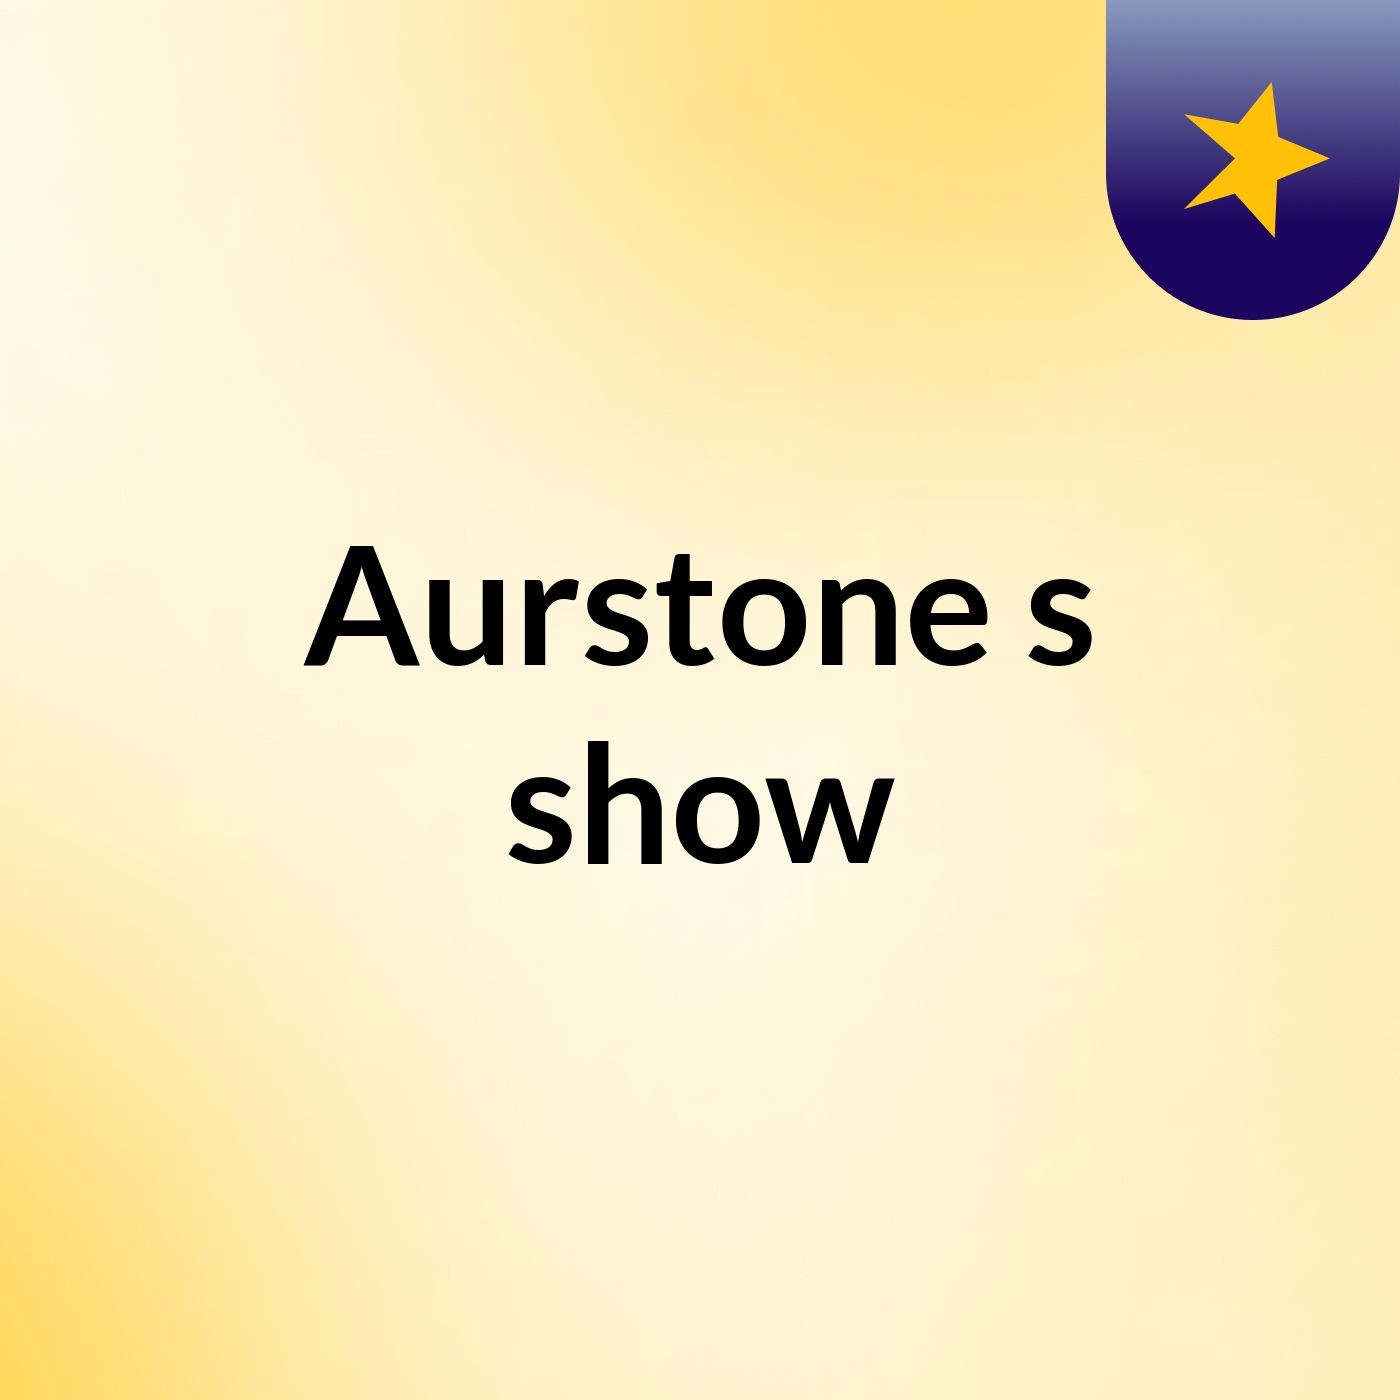 Aurstone's show